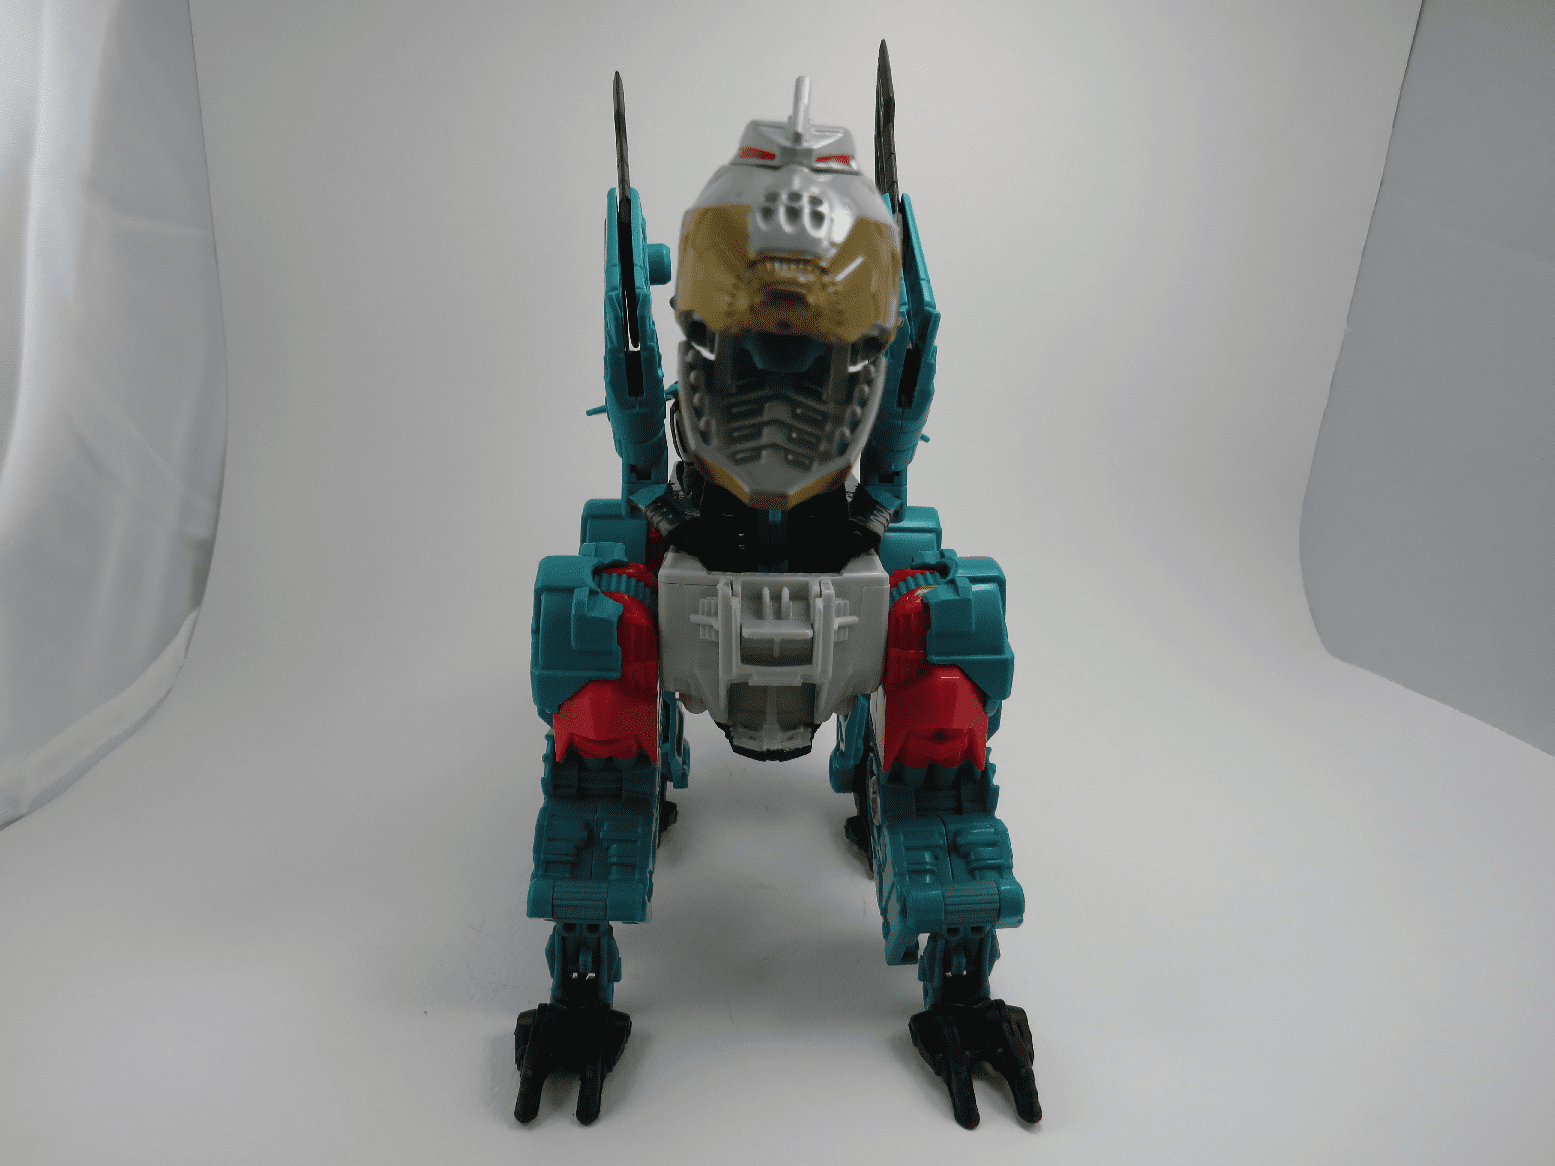 Robot mode. (Dezarus from the Liokaiser giftset)